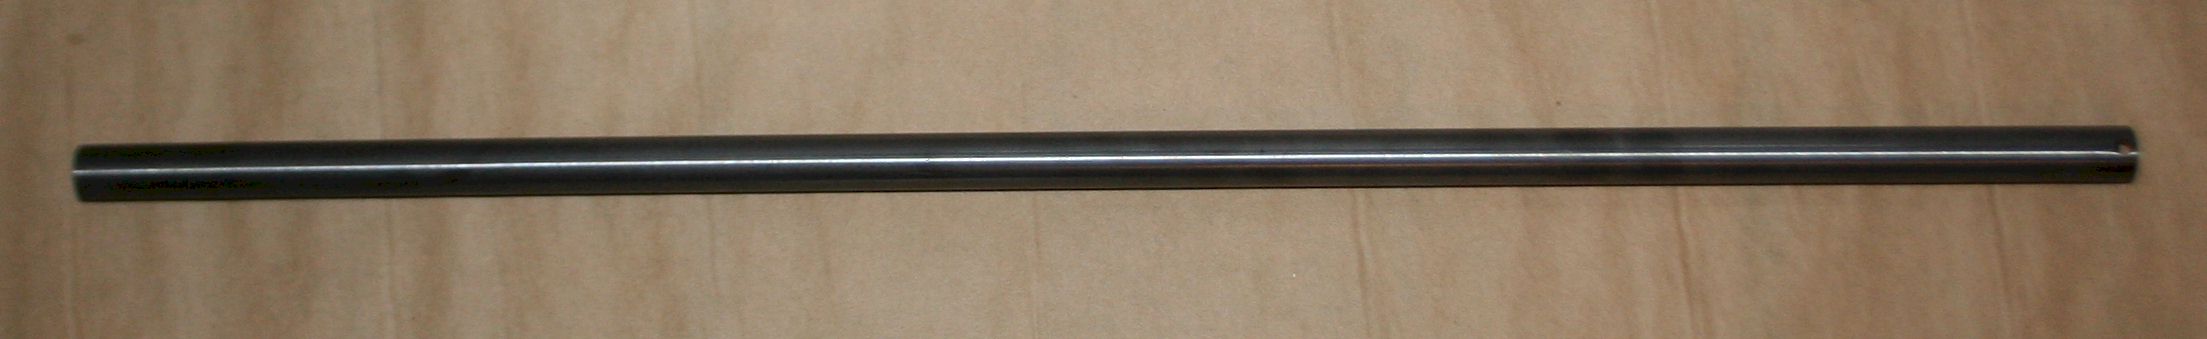 Magazine tube - Winchester Carbine 19 1/4 pre 64 Large cal 1892, 1894, 1866, 1873, Marlin ORIGINAL